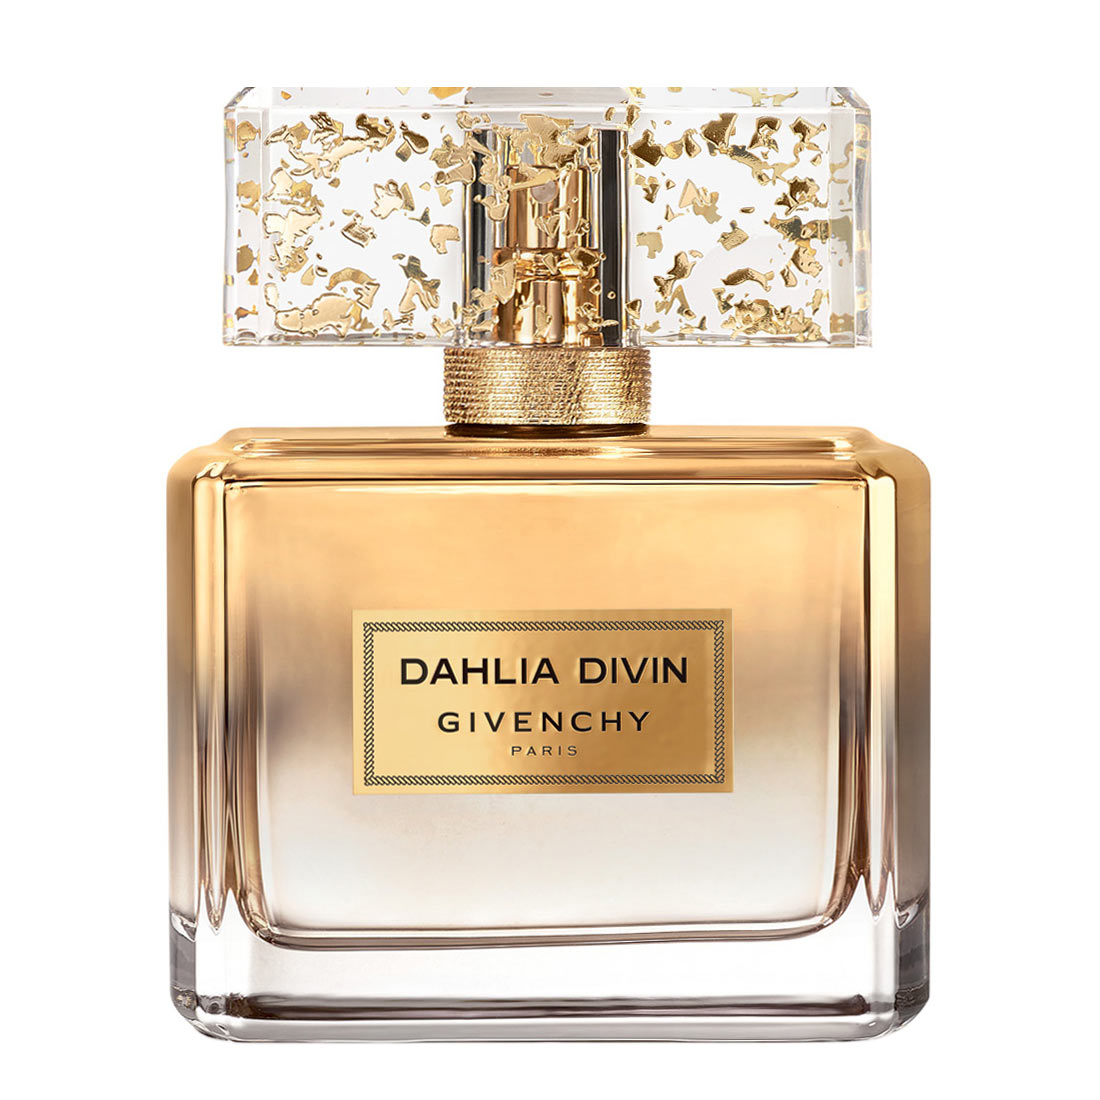 Dahlia Divin Le Nectar de Parfum Givenchy Image